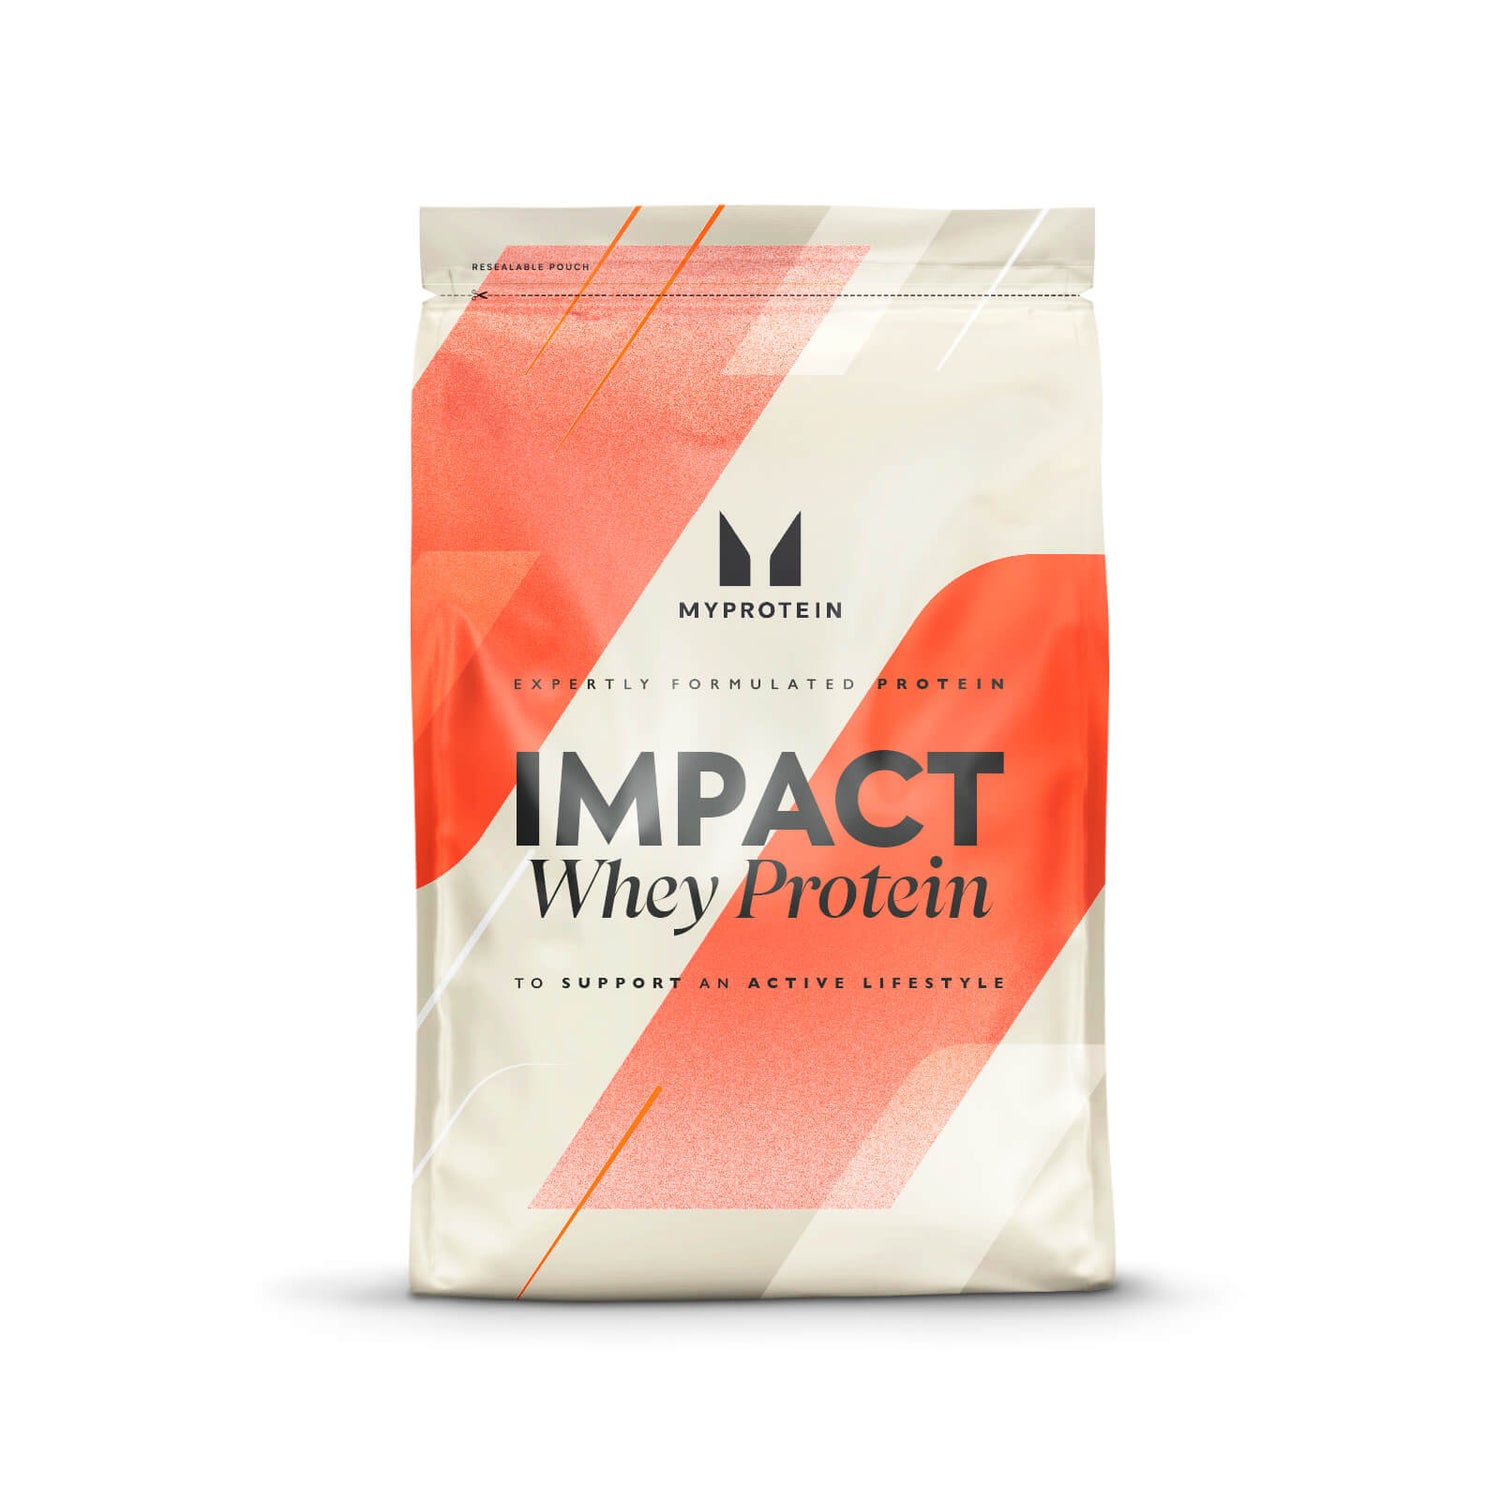 Impact Whey Protein Powder - 2.5kg - Chocolate Peanut Butter